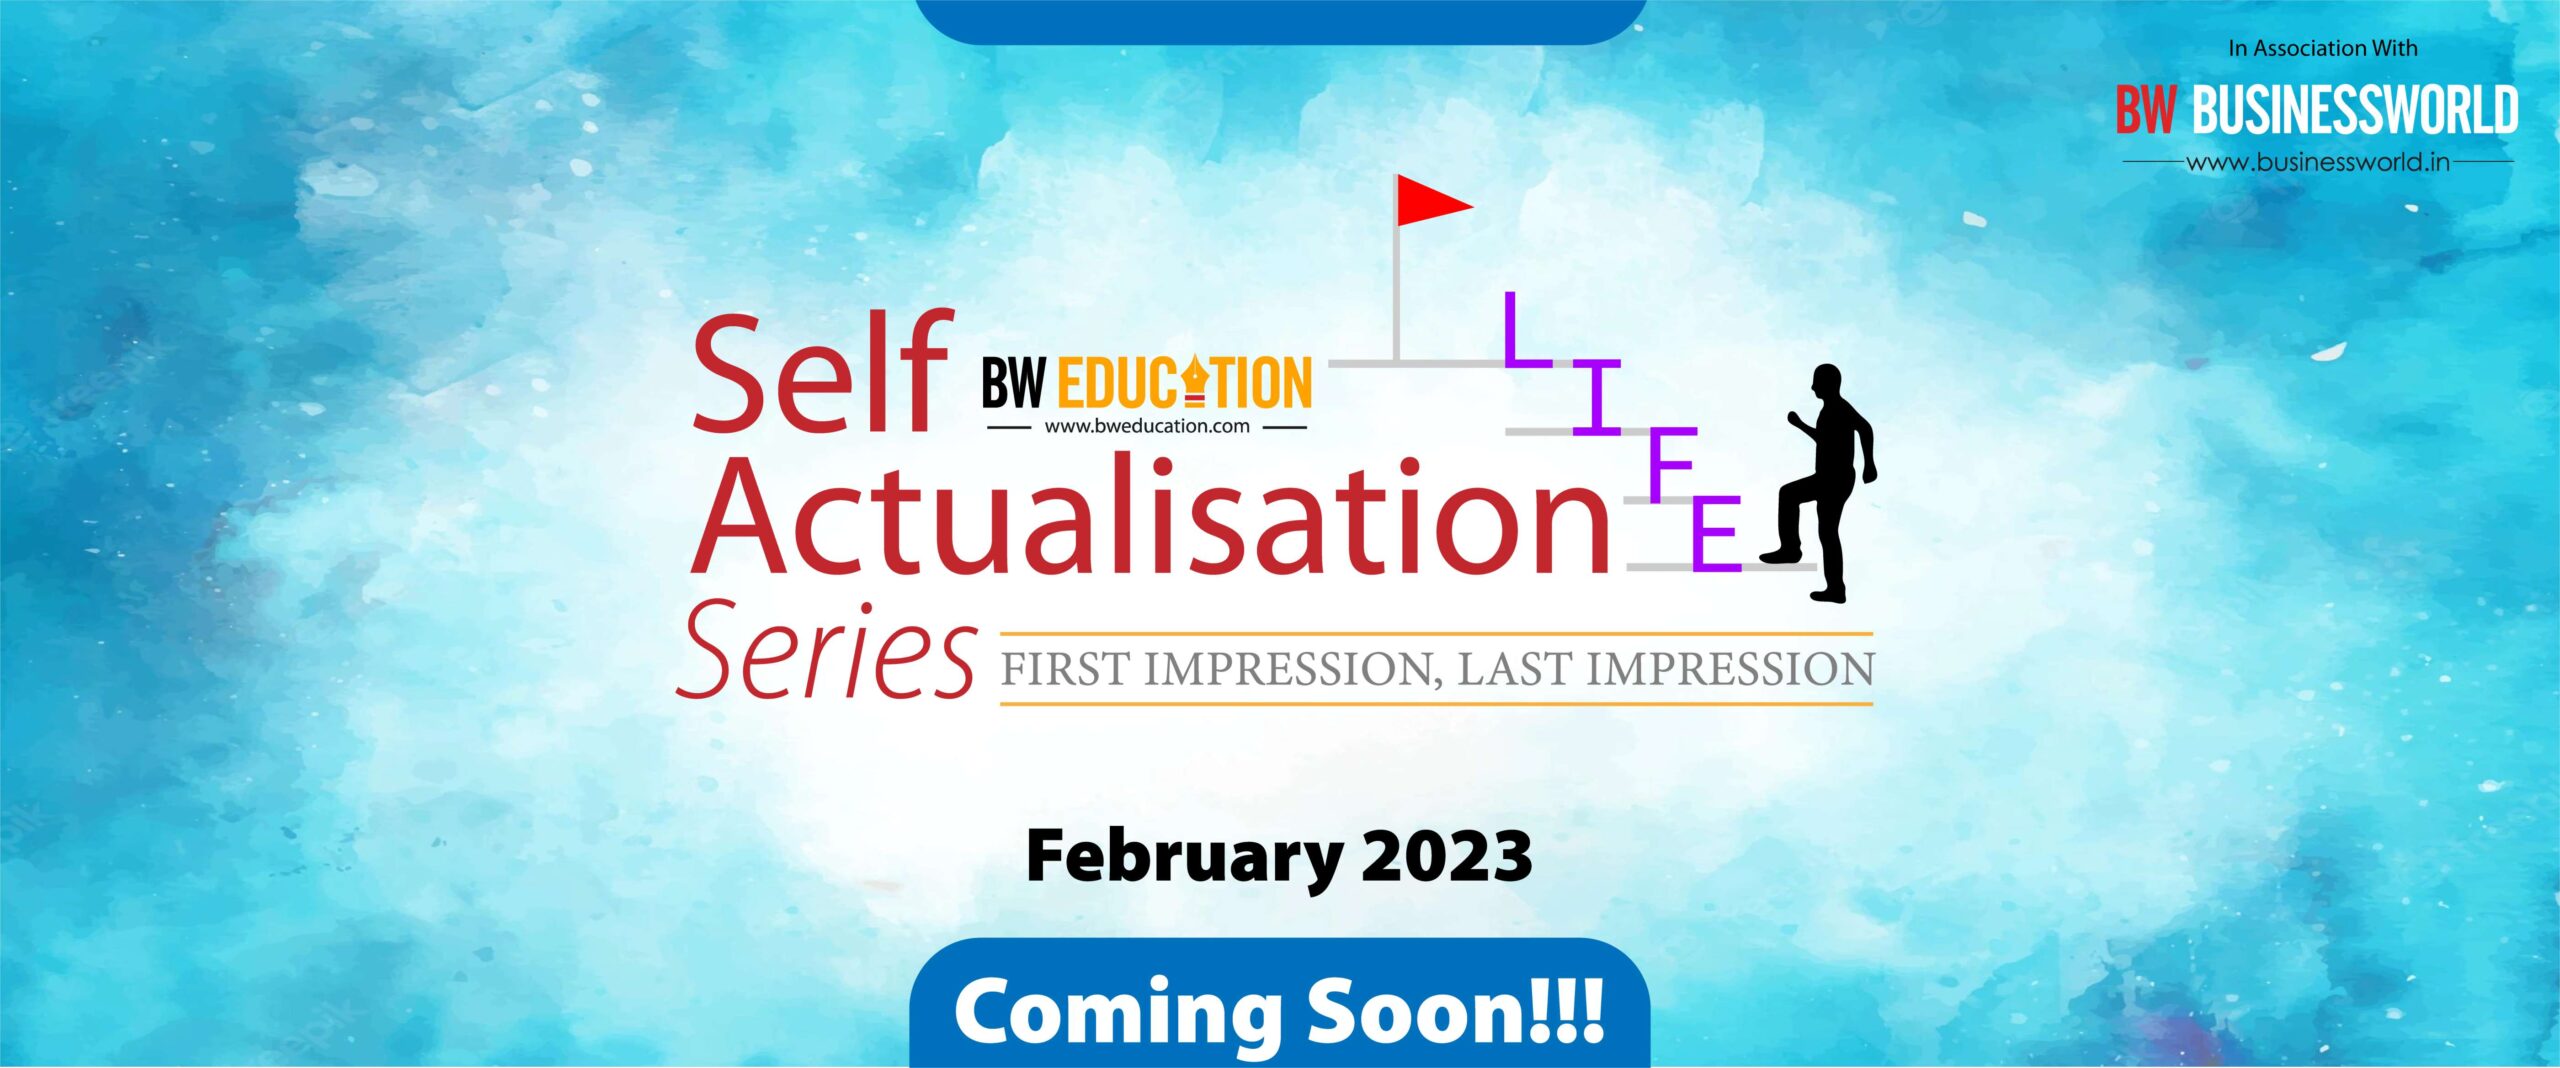 BW Businessworld Series on Self-Actualisation First Impression, Last Impression